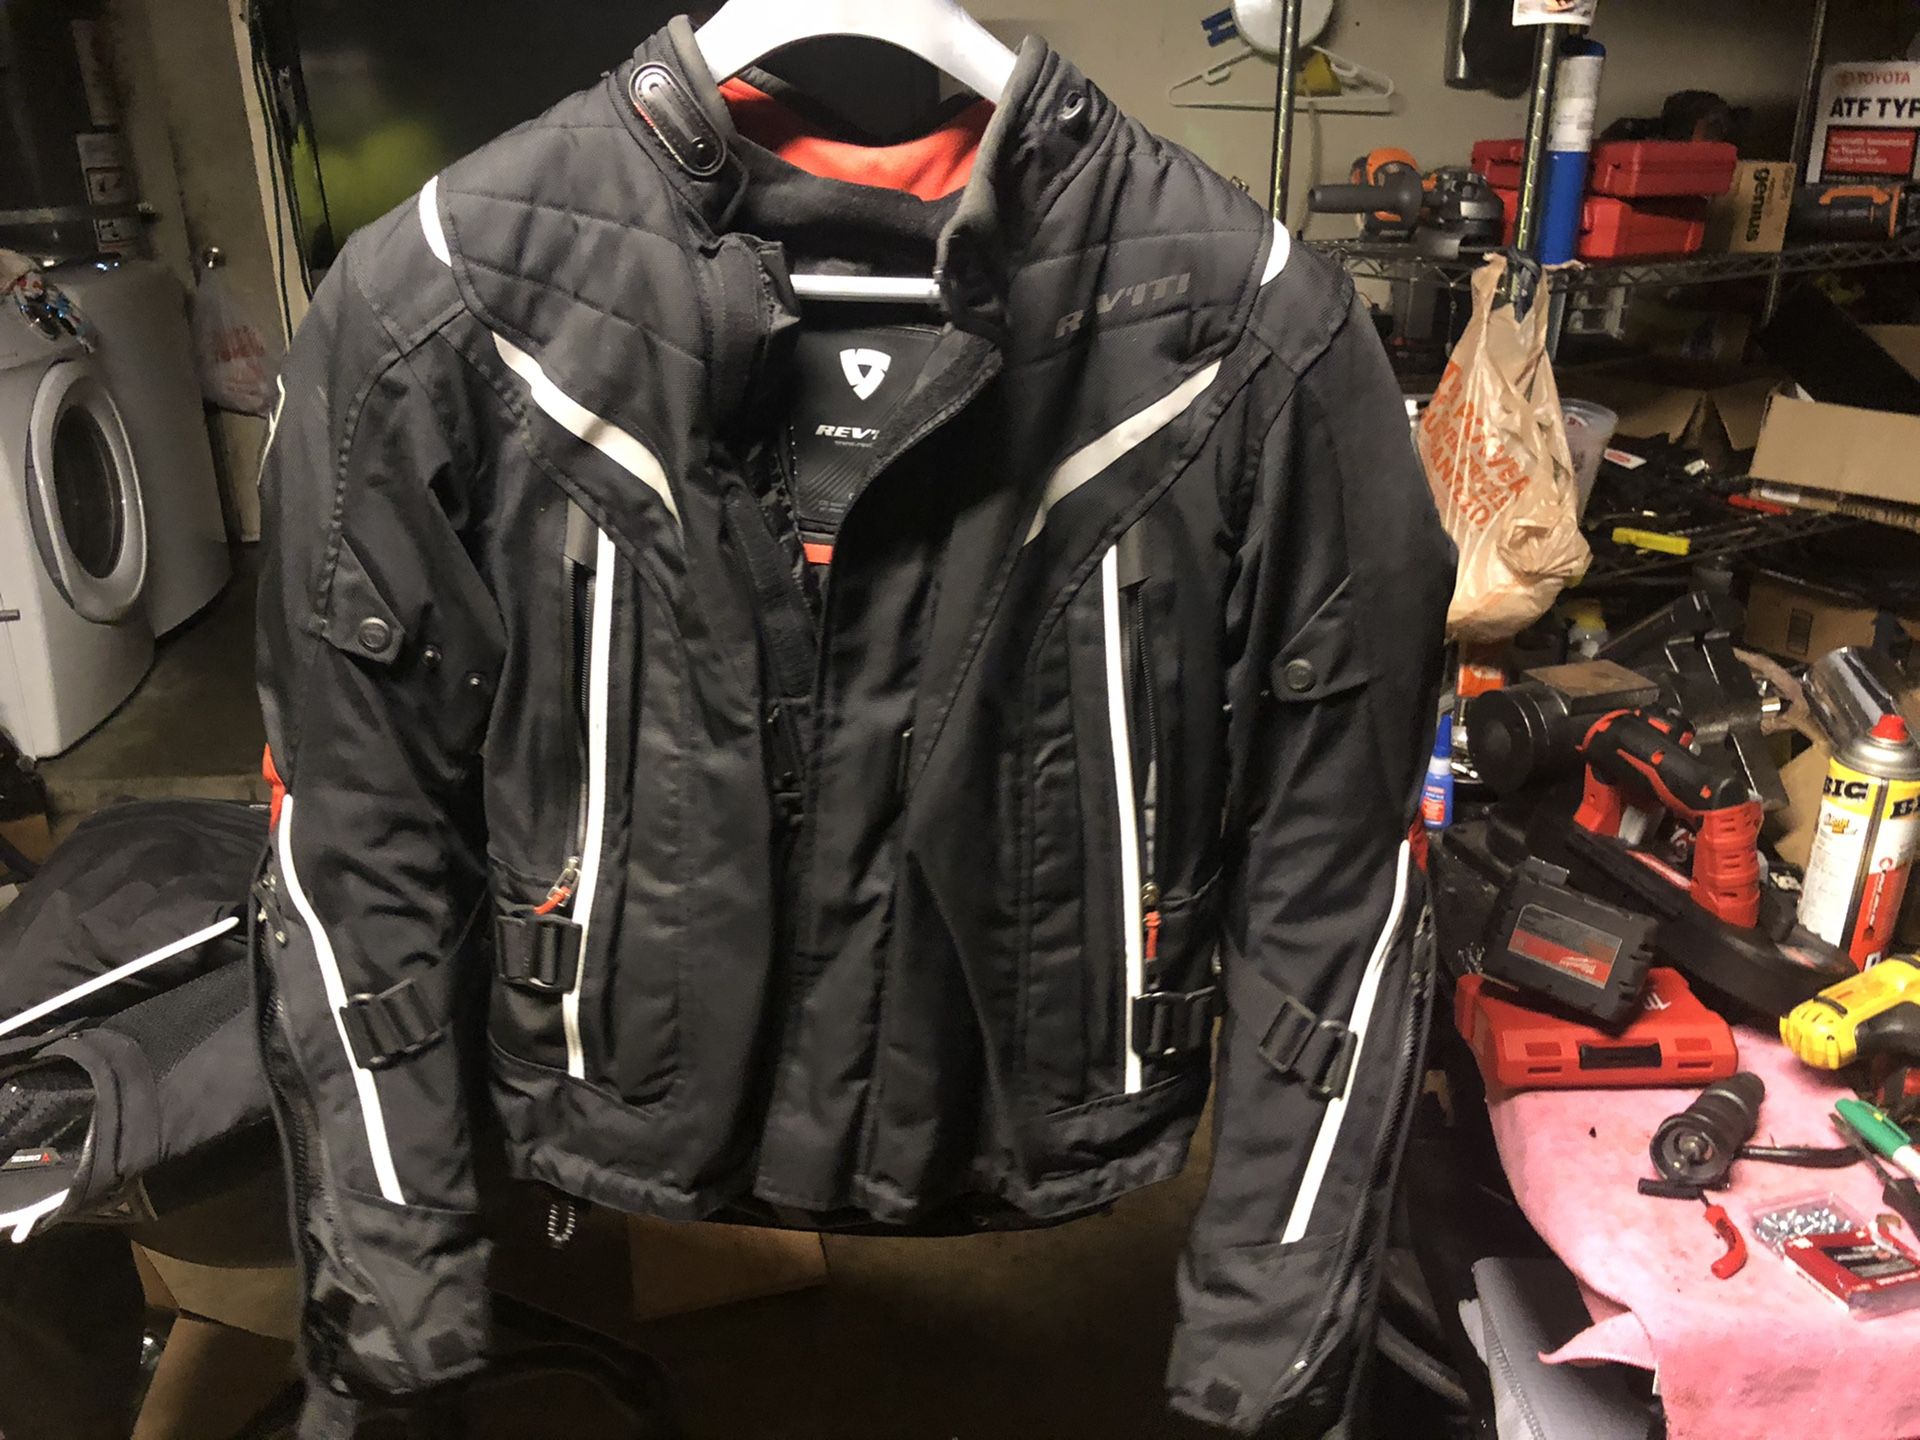 Revit ES Large 4 season motorcycle jacket